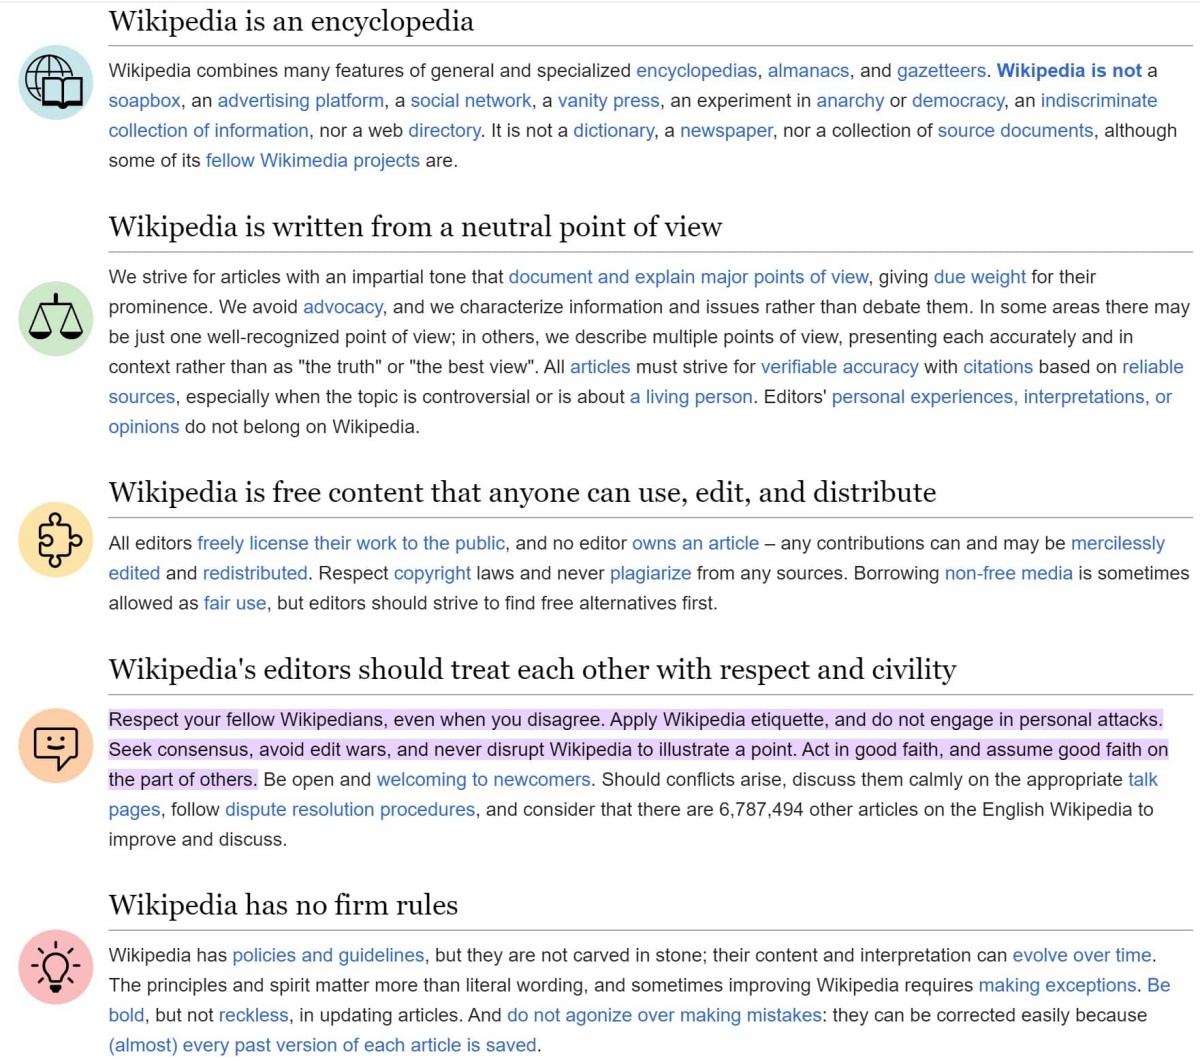 5 pillars of Wikipedia